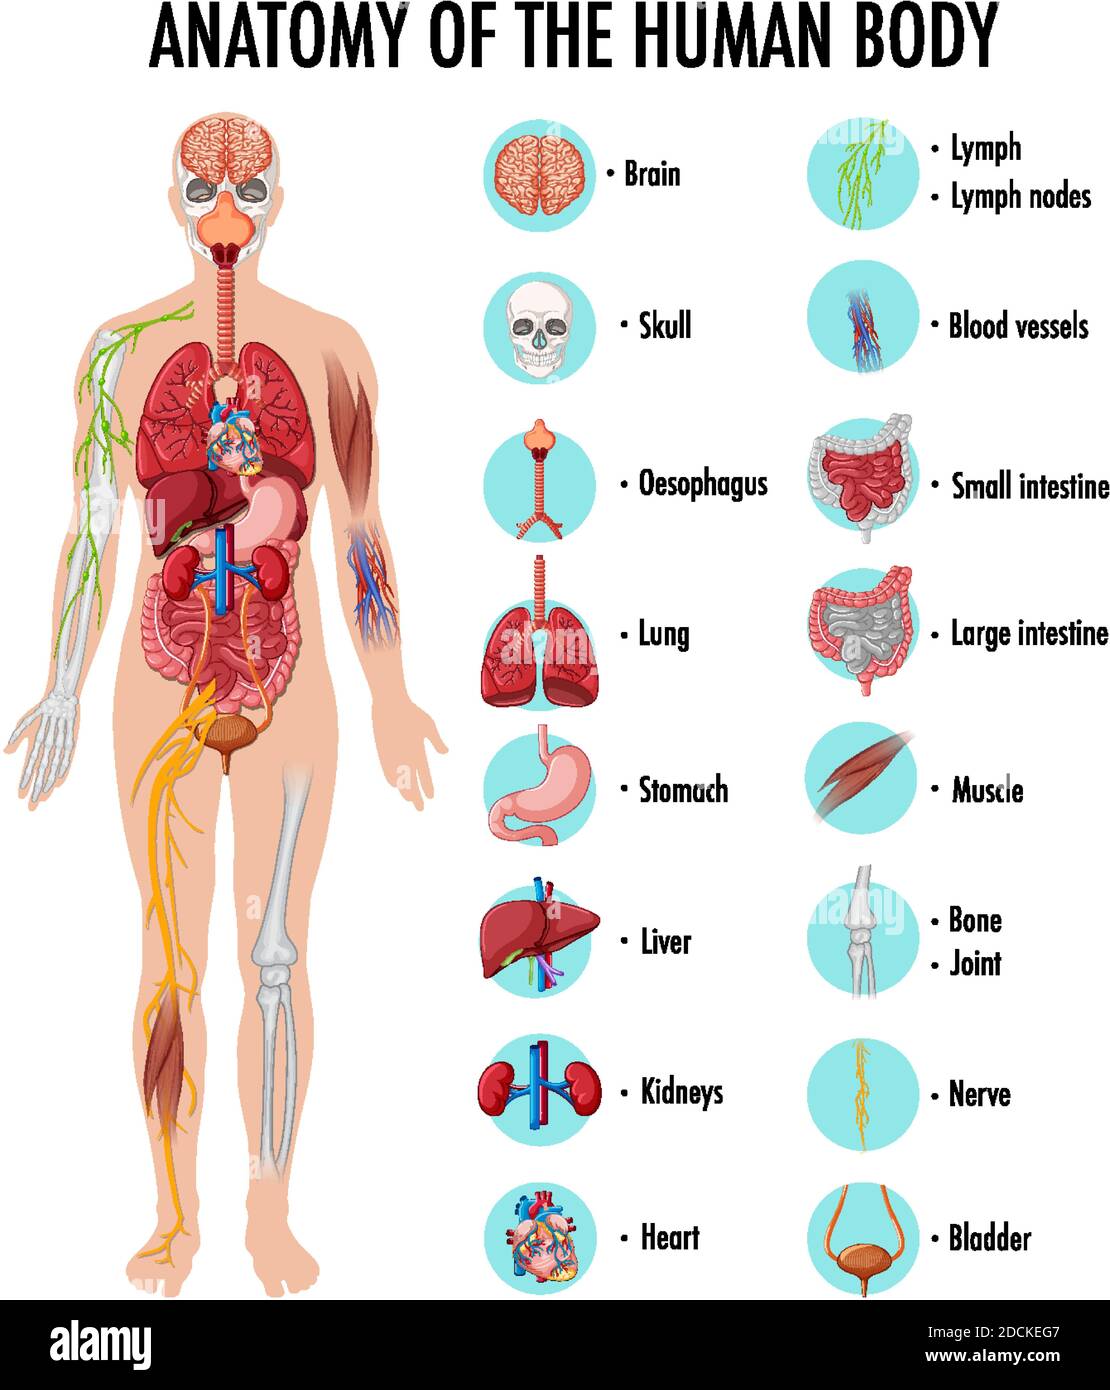 Anatomy of the human body information infographic illustration Stock Vector  Image & Art - Alamy